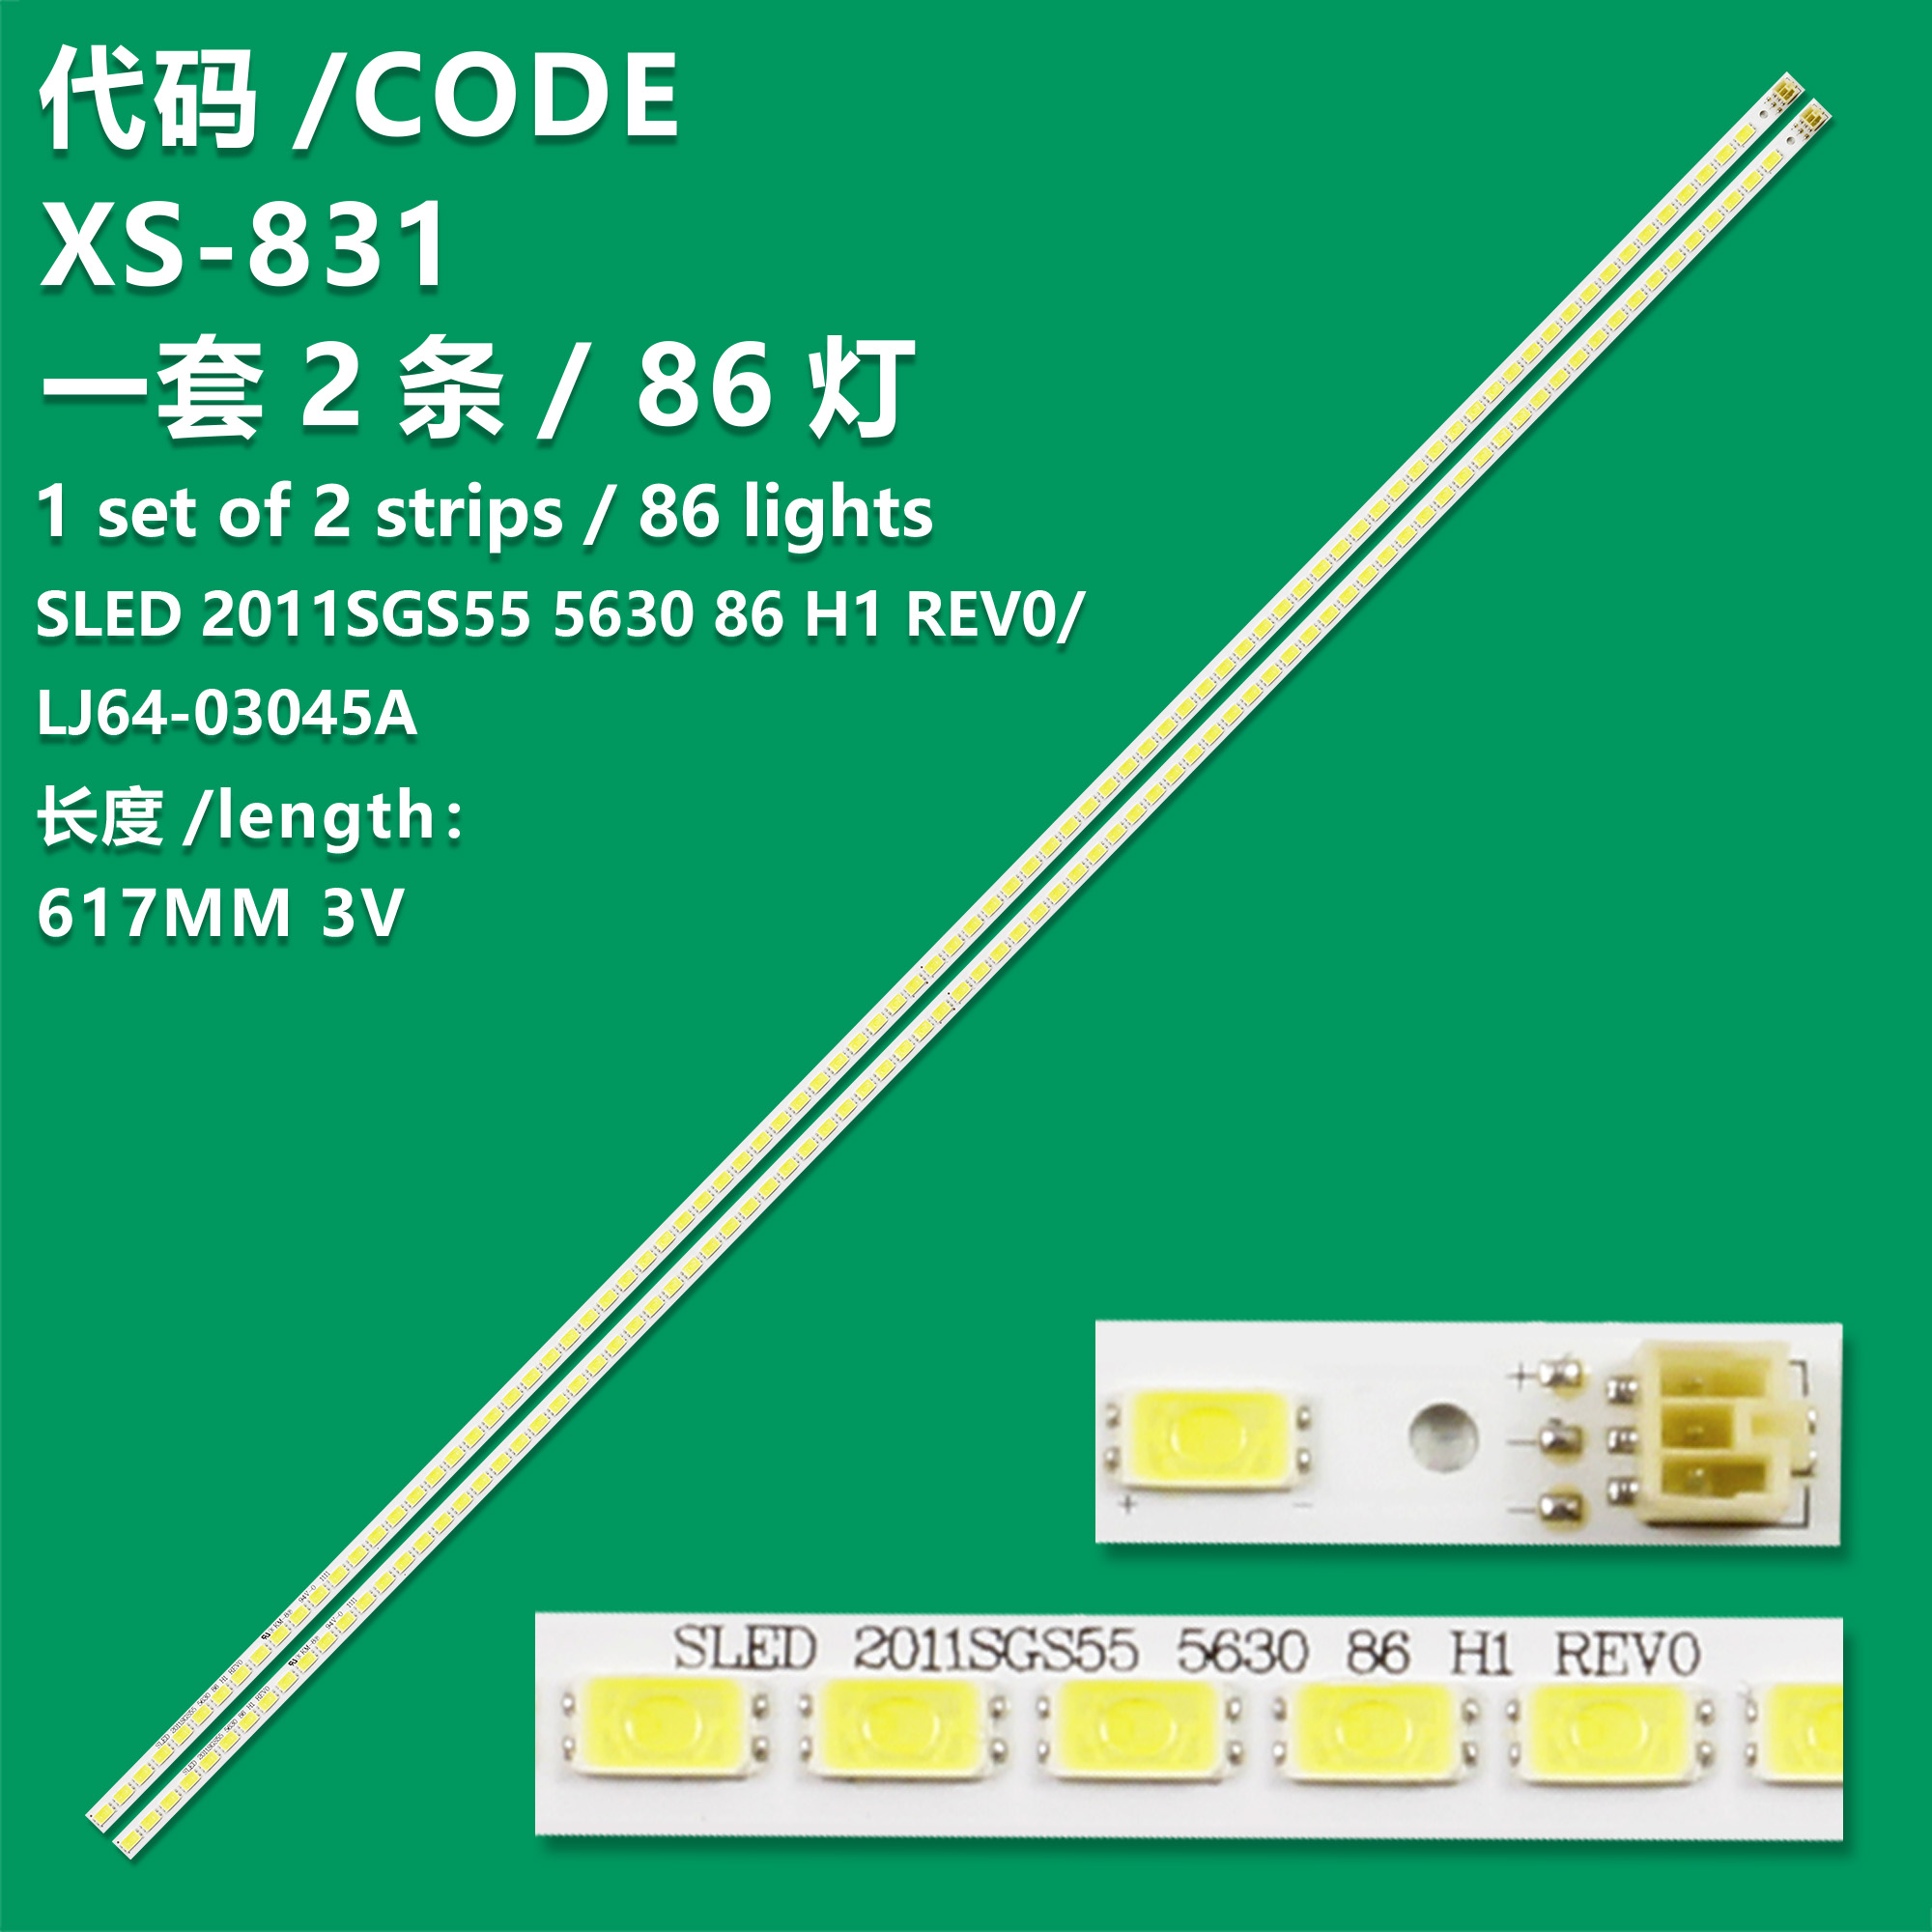 XS-831 New LCD TV Backlight Strip SLED 2011SGS55 5630 86 H1 REV0/LJ64-03045A For Changhong 3DTV55880i